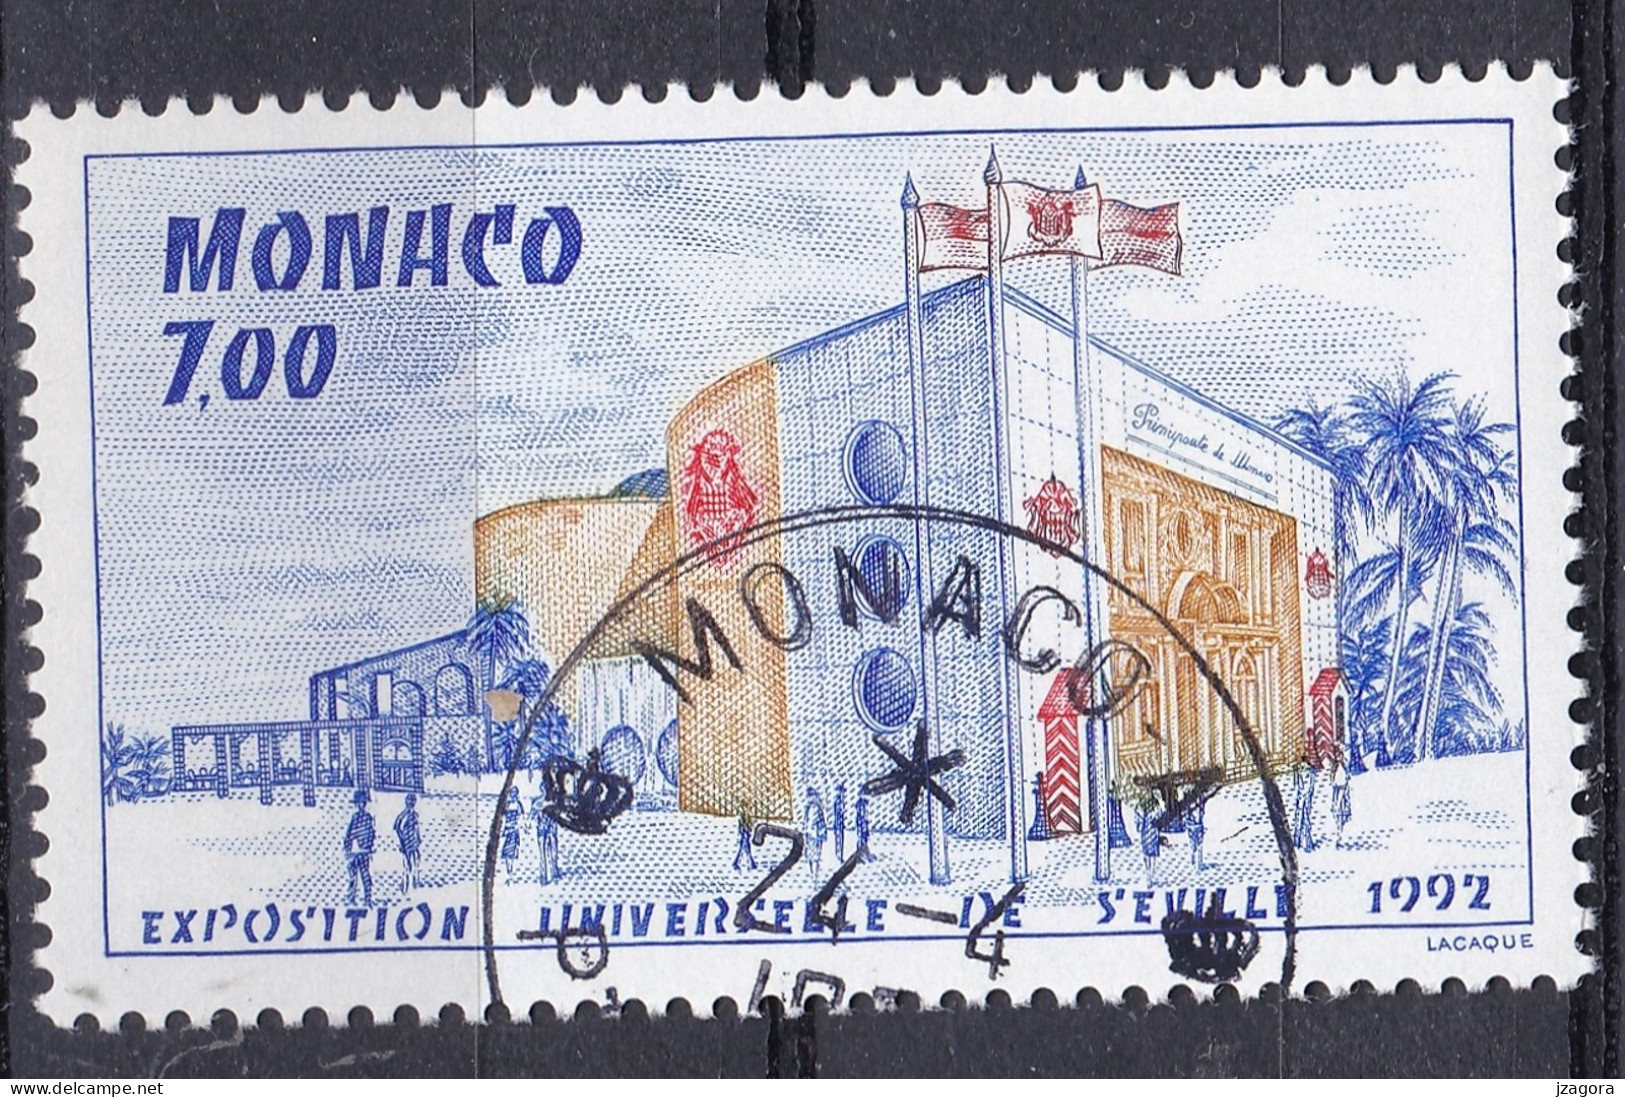 EXPO 1992  EXHIBITION SEVILLA SPAIN - MONACO 2000 MI 2502 USED NH WITH GUM - 1992 – Sevilla (Spanien)